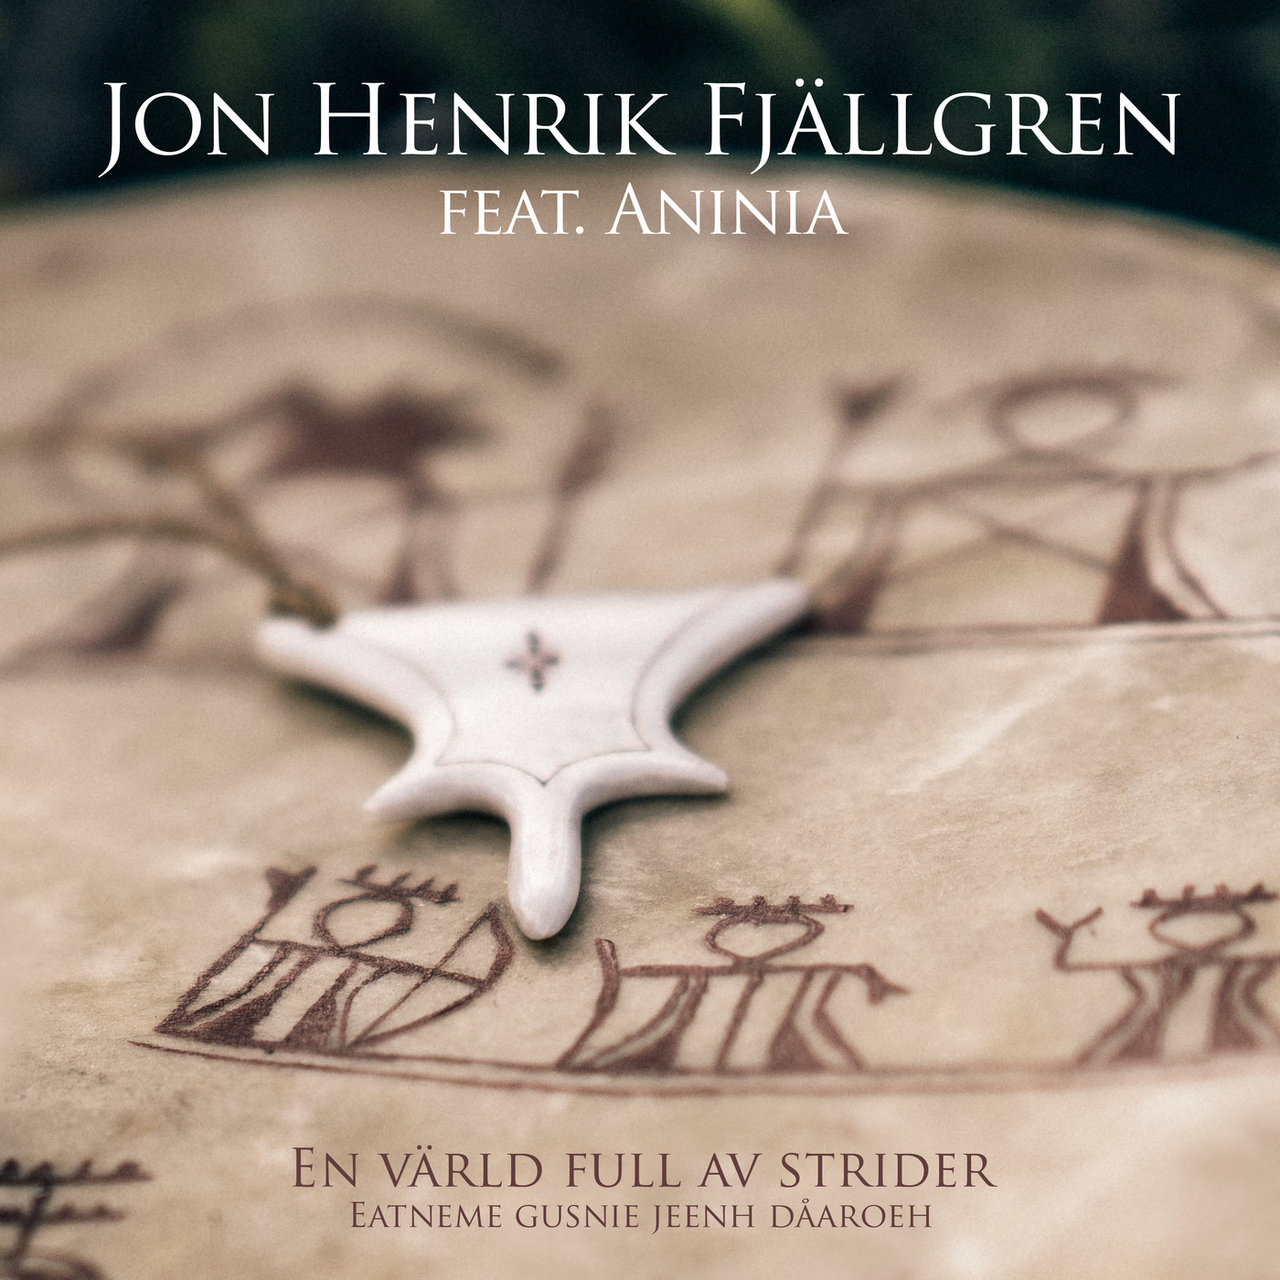 Jon Henrik Fjällgren featuring Aninia — En värld full av strider (Eatneme gusnie jeenh dåaroeh) cover artwork